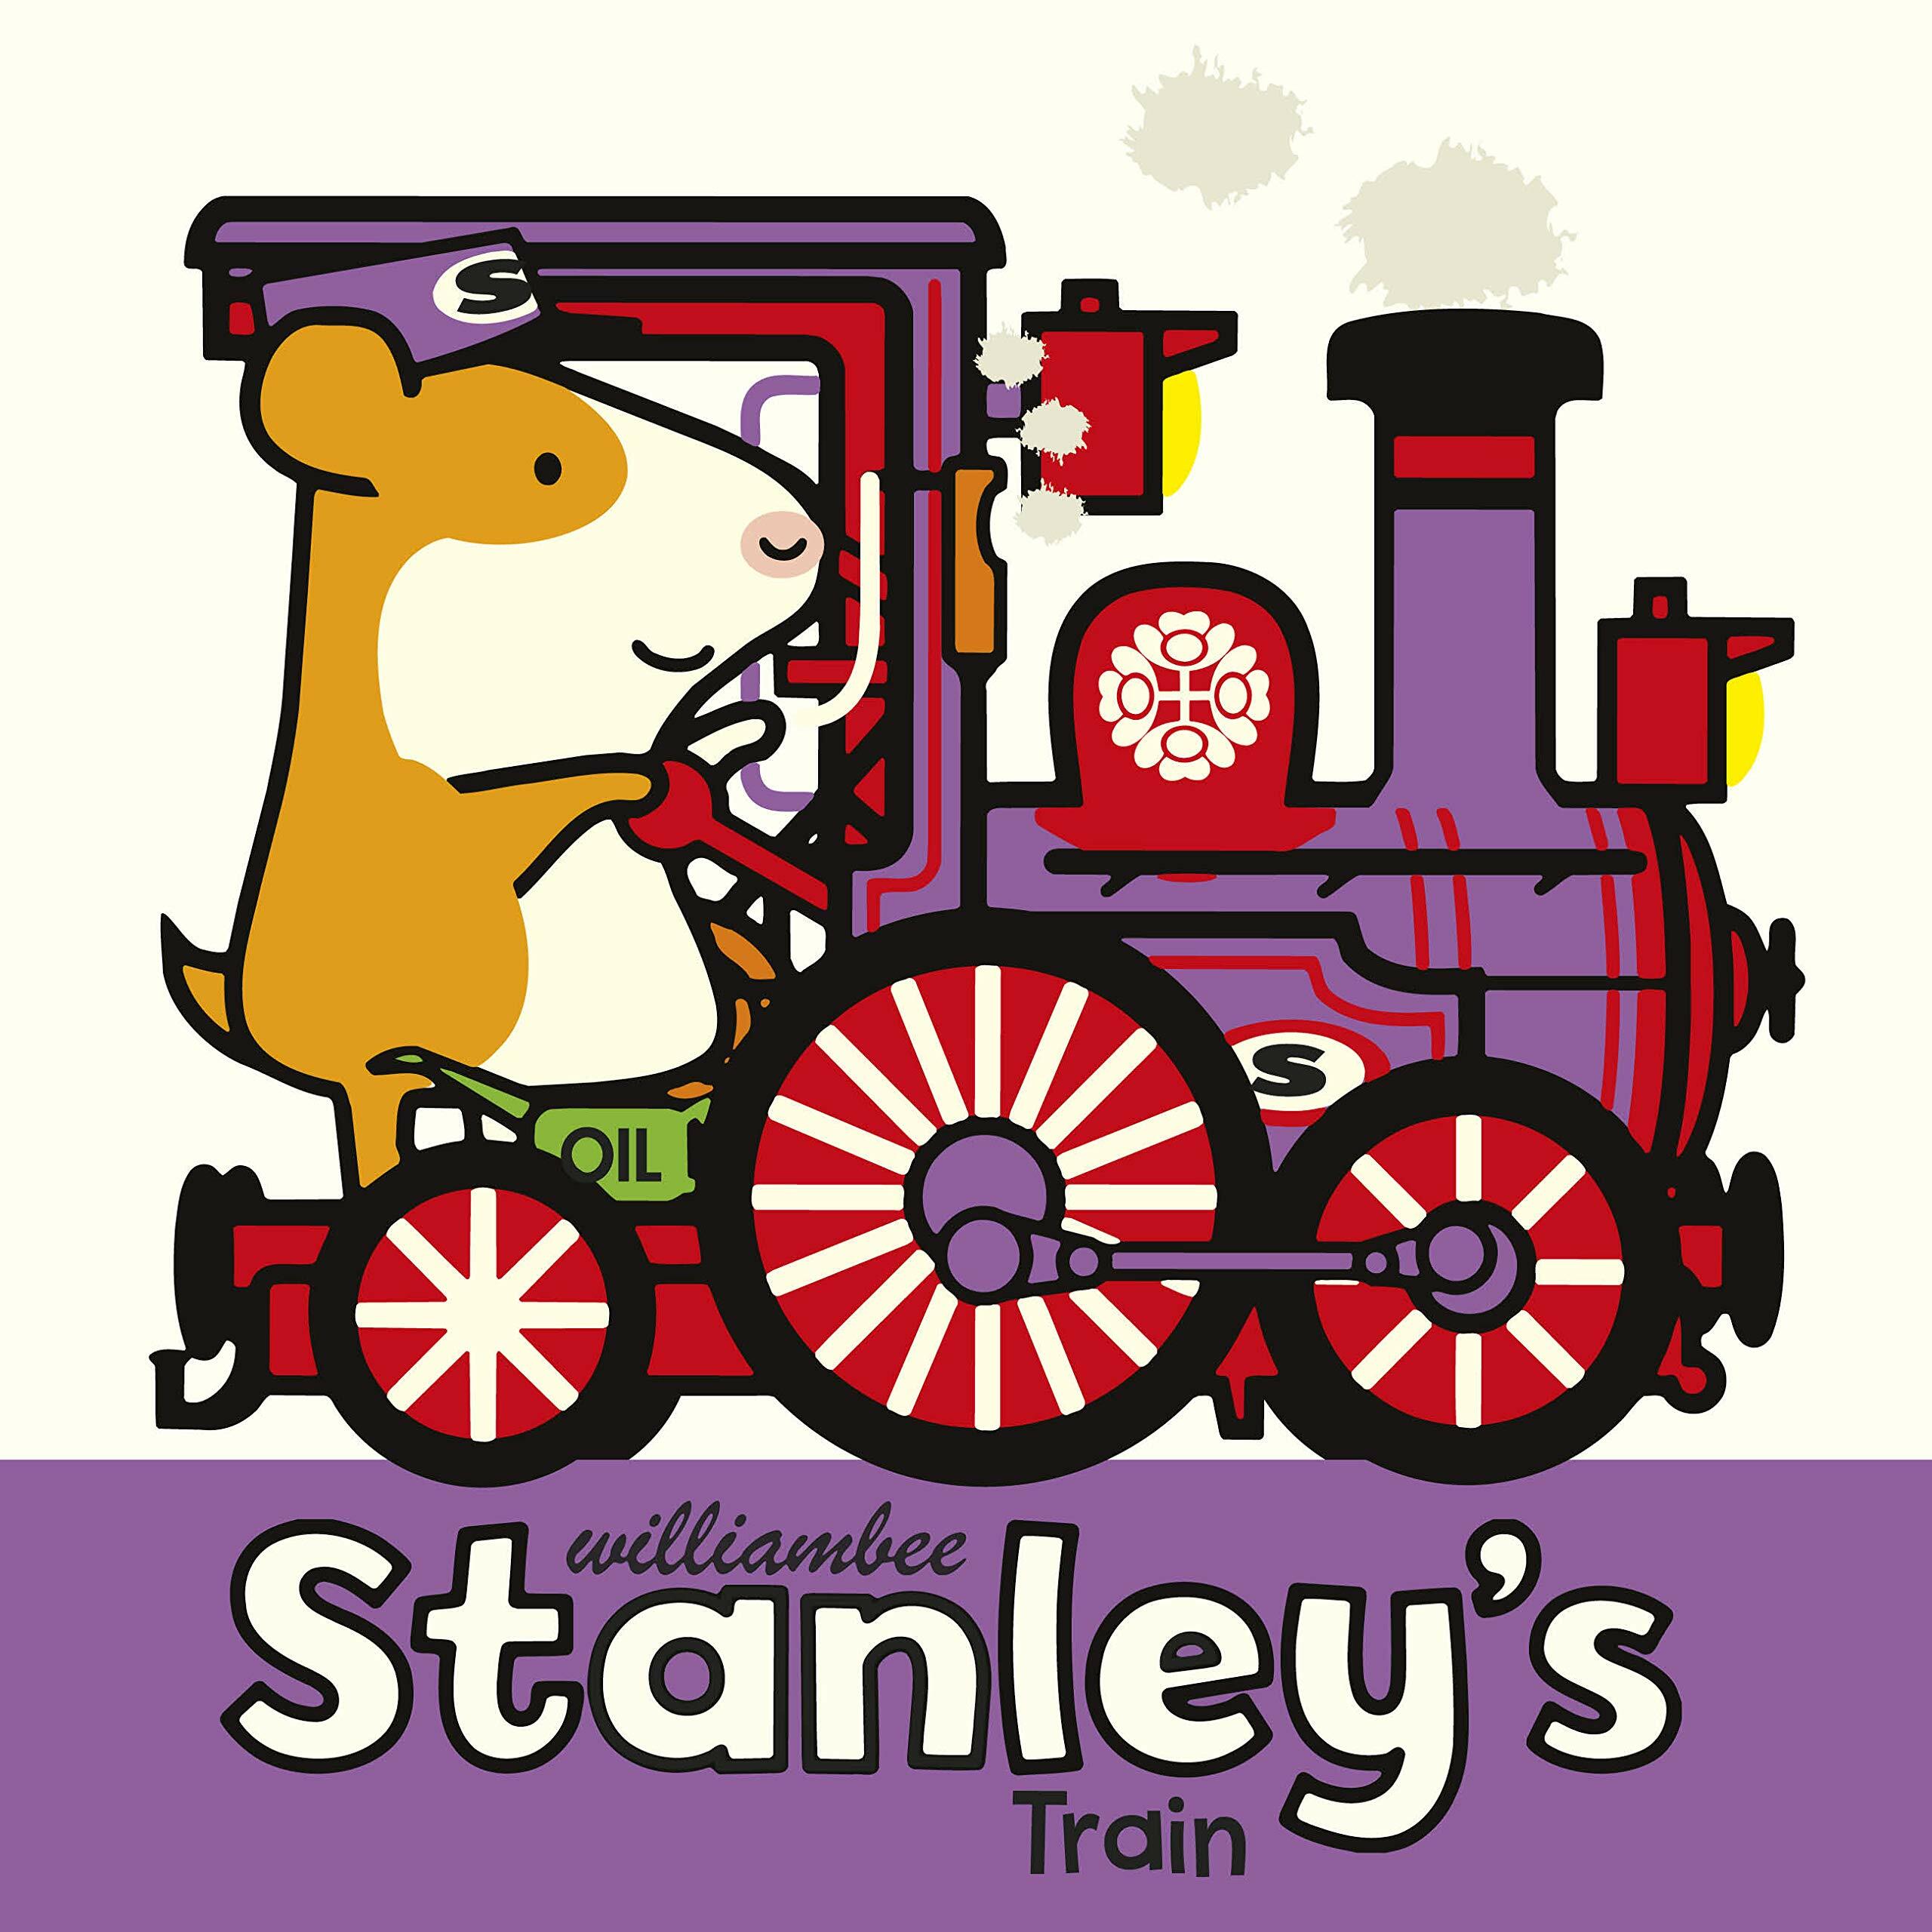 Stanleys Train (Paperback)